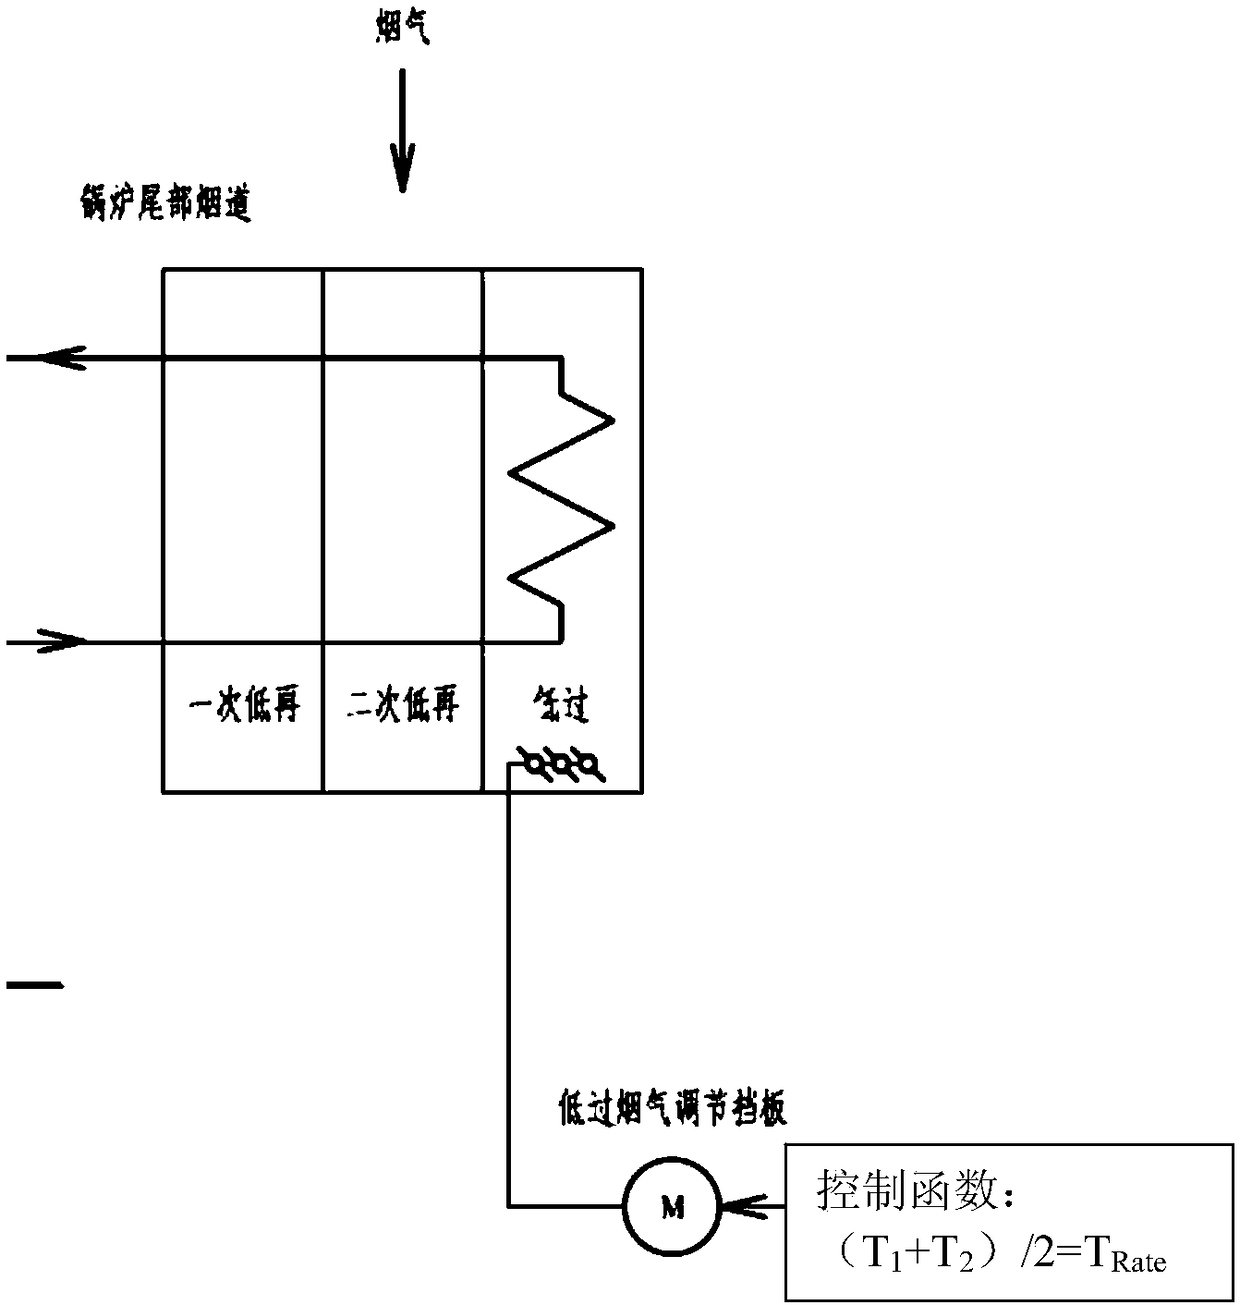 Three-baffle temperature adjusting control method of secondary reheating boiler